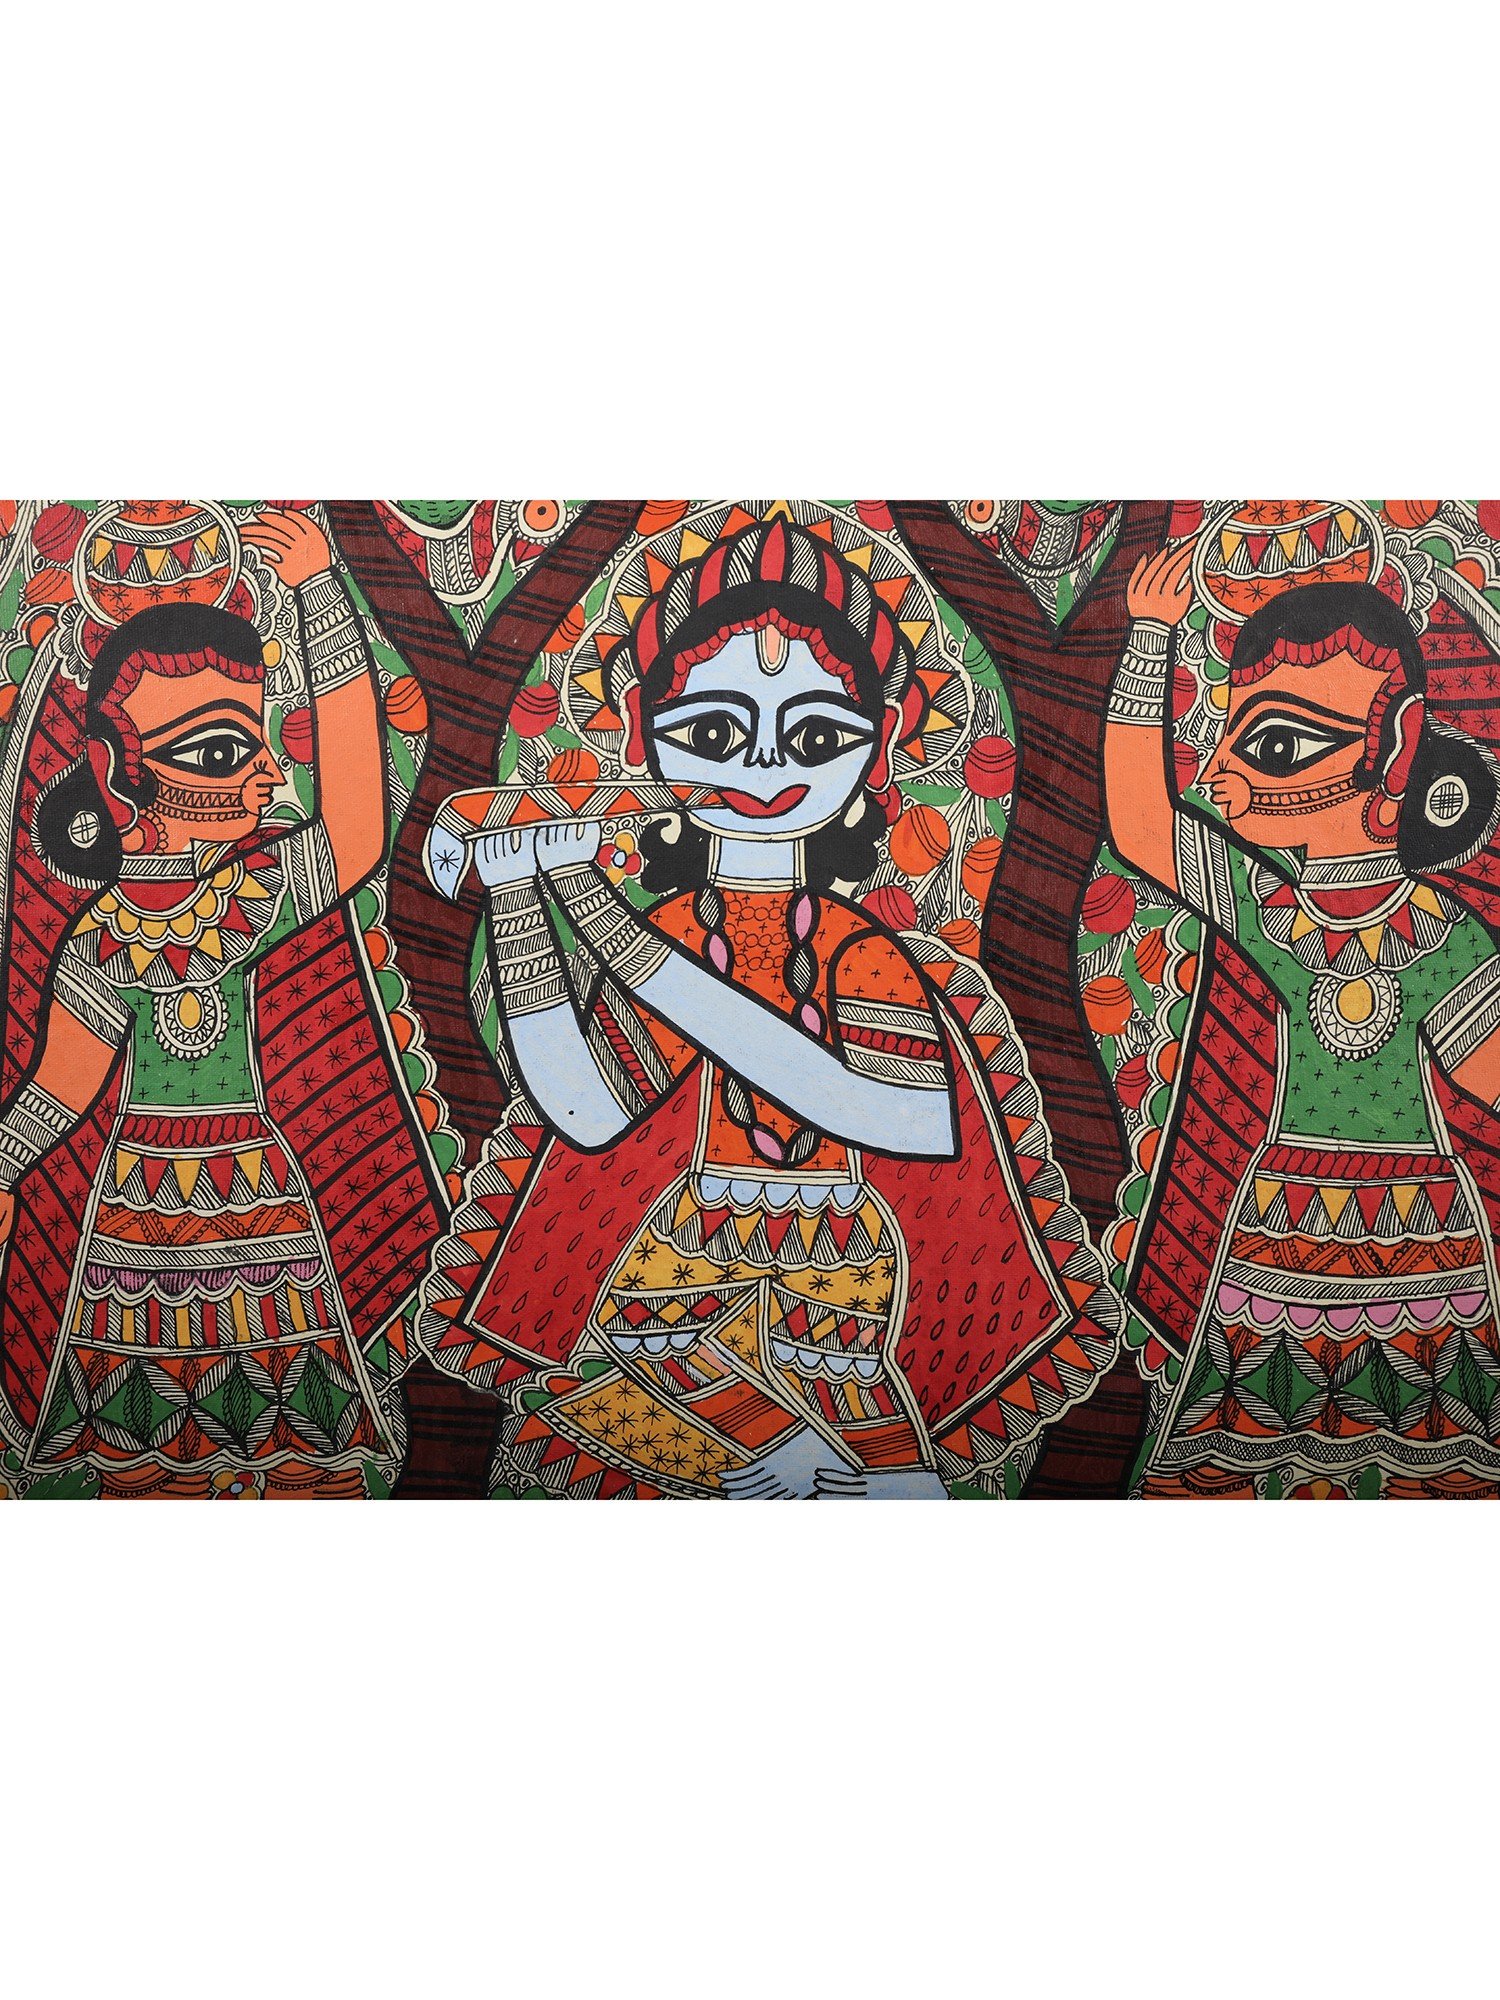 Krishna Leela -Madhubani Art | Handmade Paper | By Ajay Kumar Jha ...